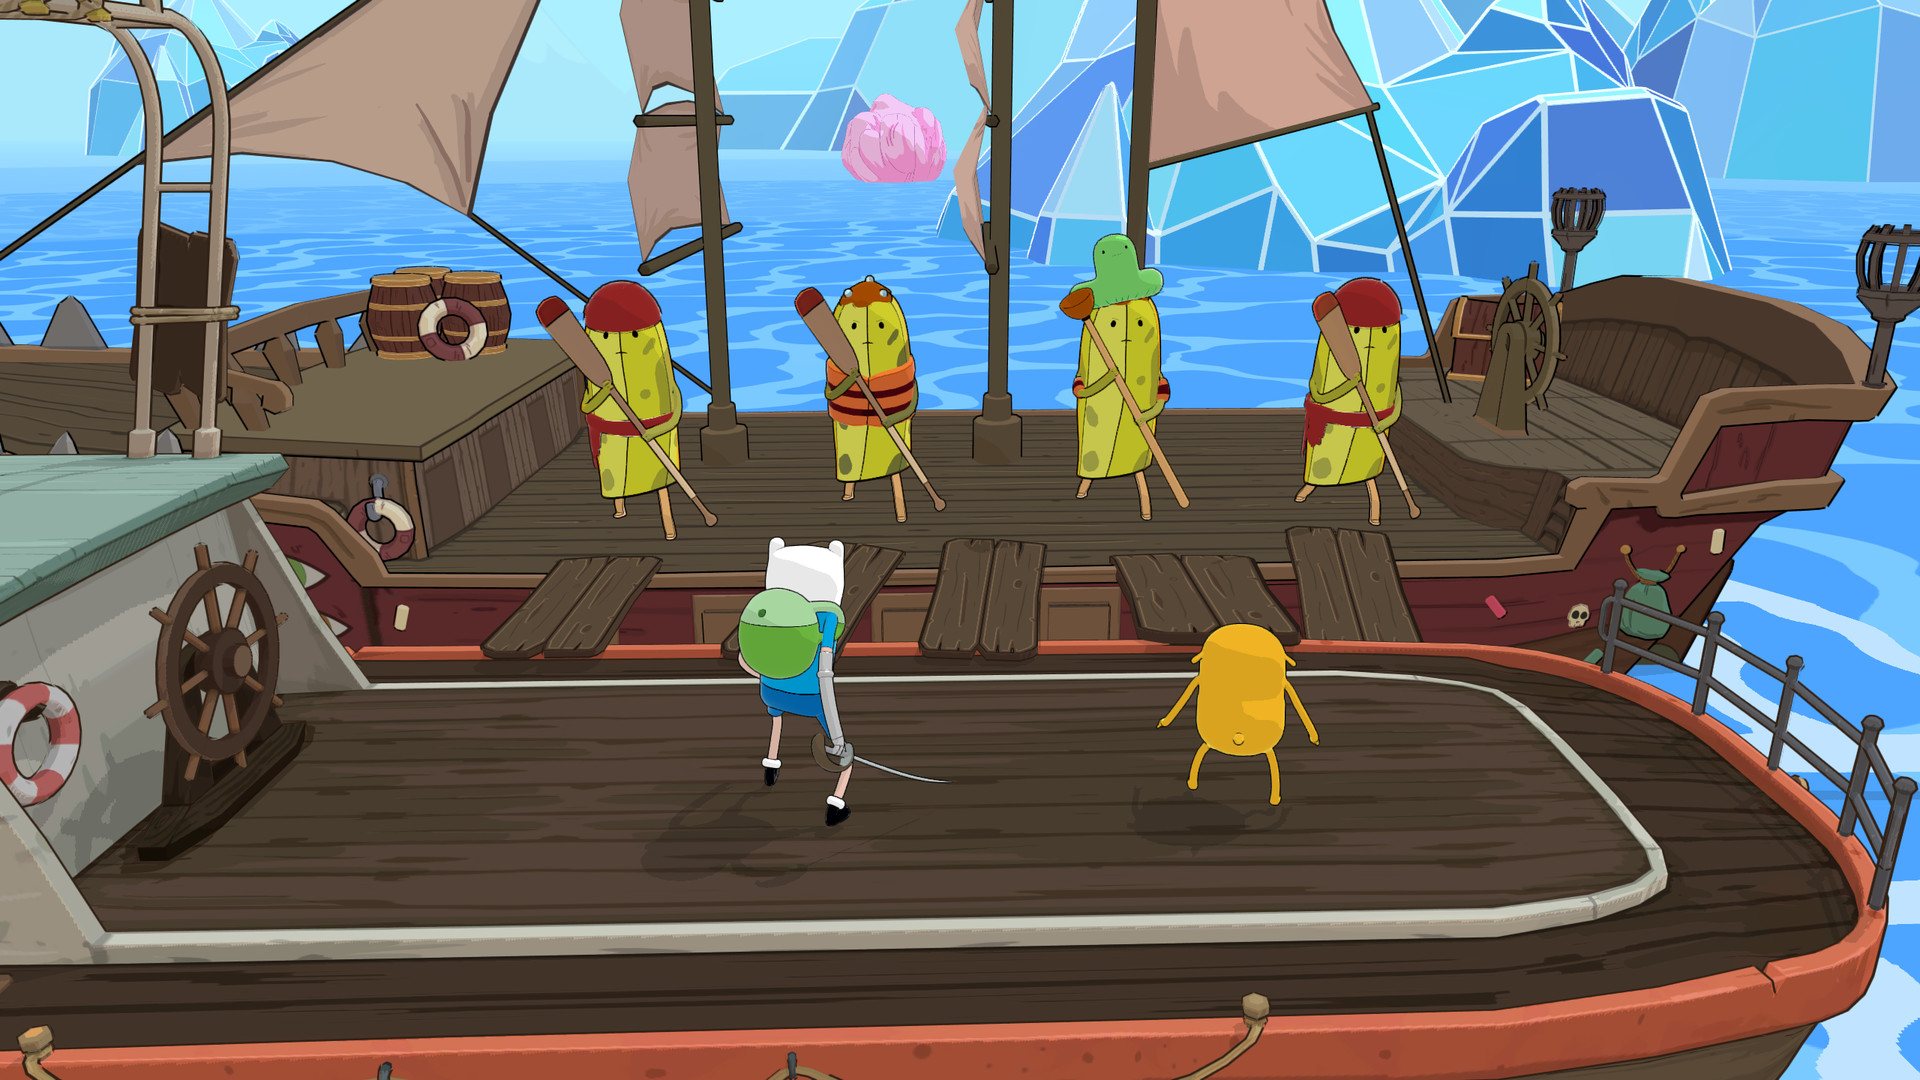 [$ 3.62] Adventure Time: Pirates of the Enchiridion EU Steam CD Key